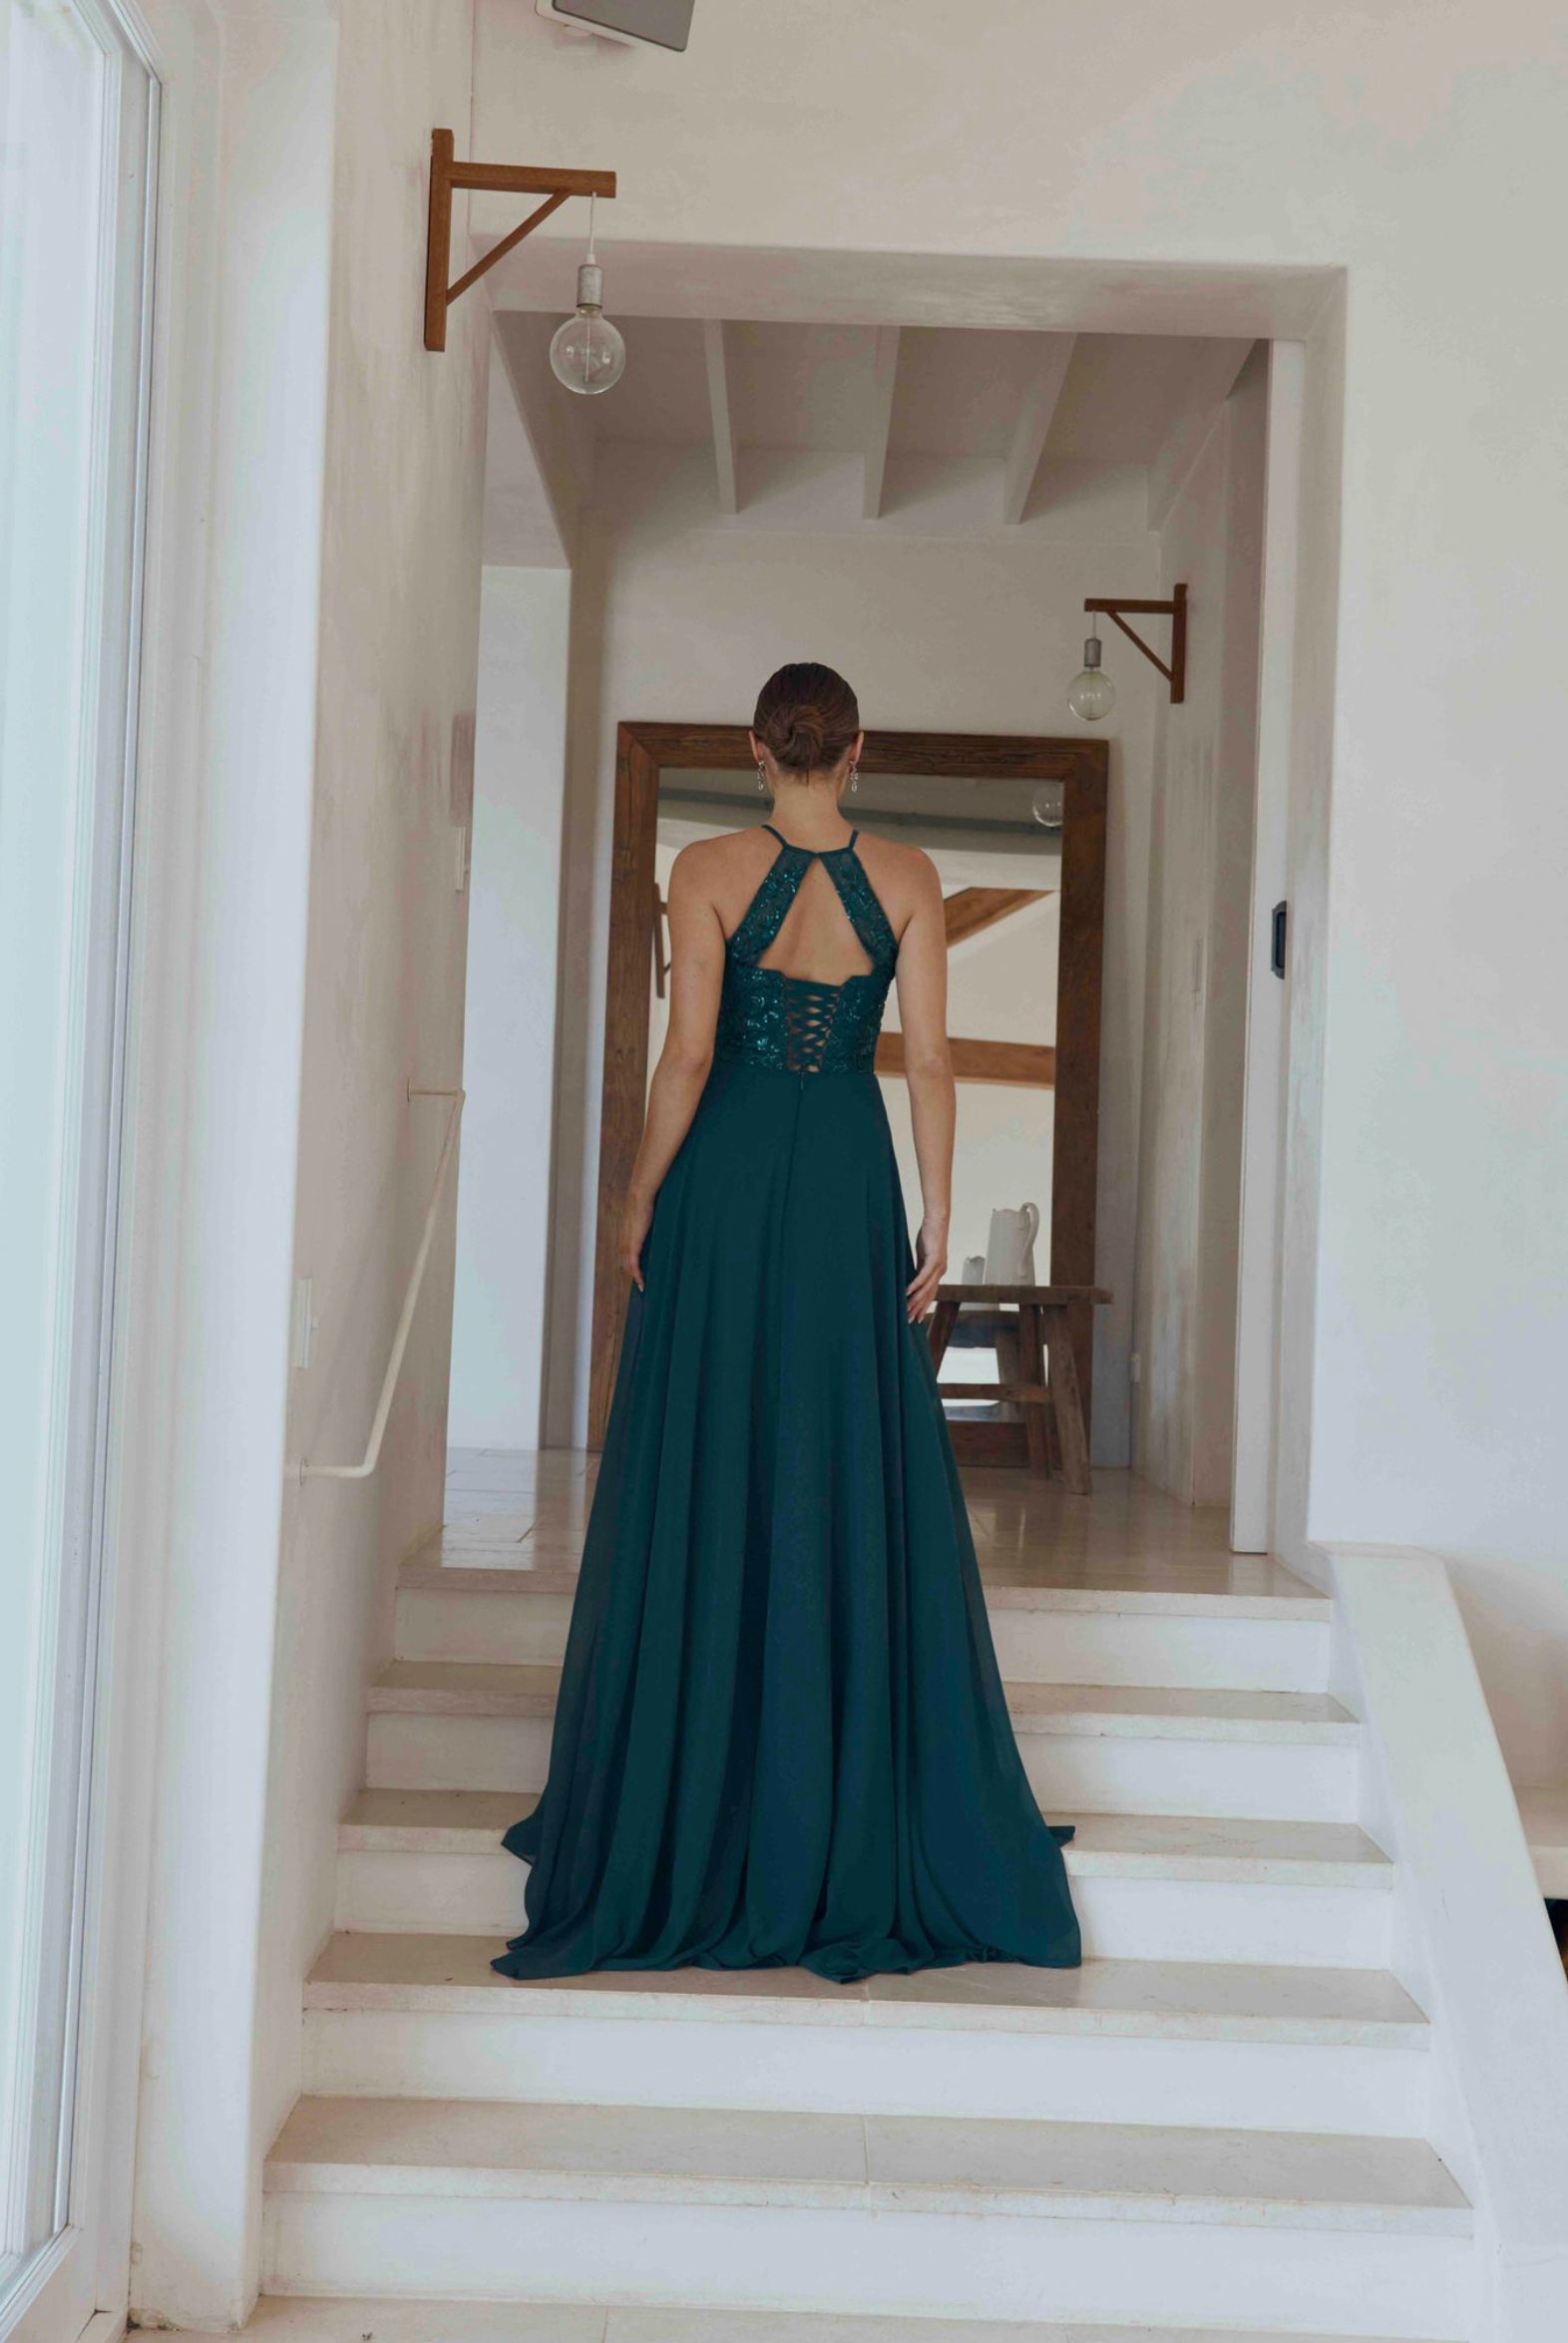 Heather PO2310 by Tania Olsen Emerald Formal Dress